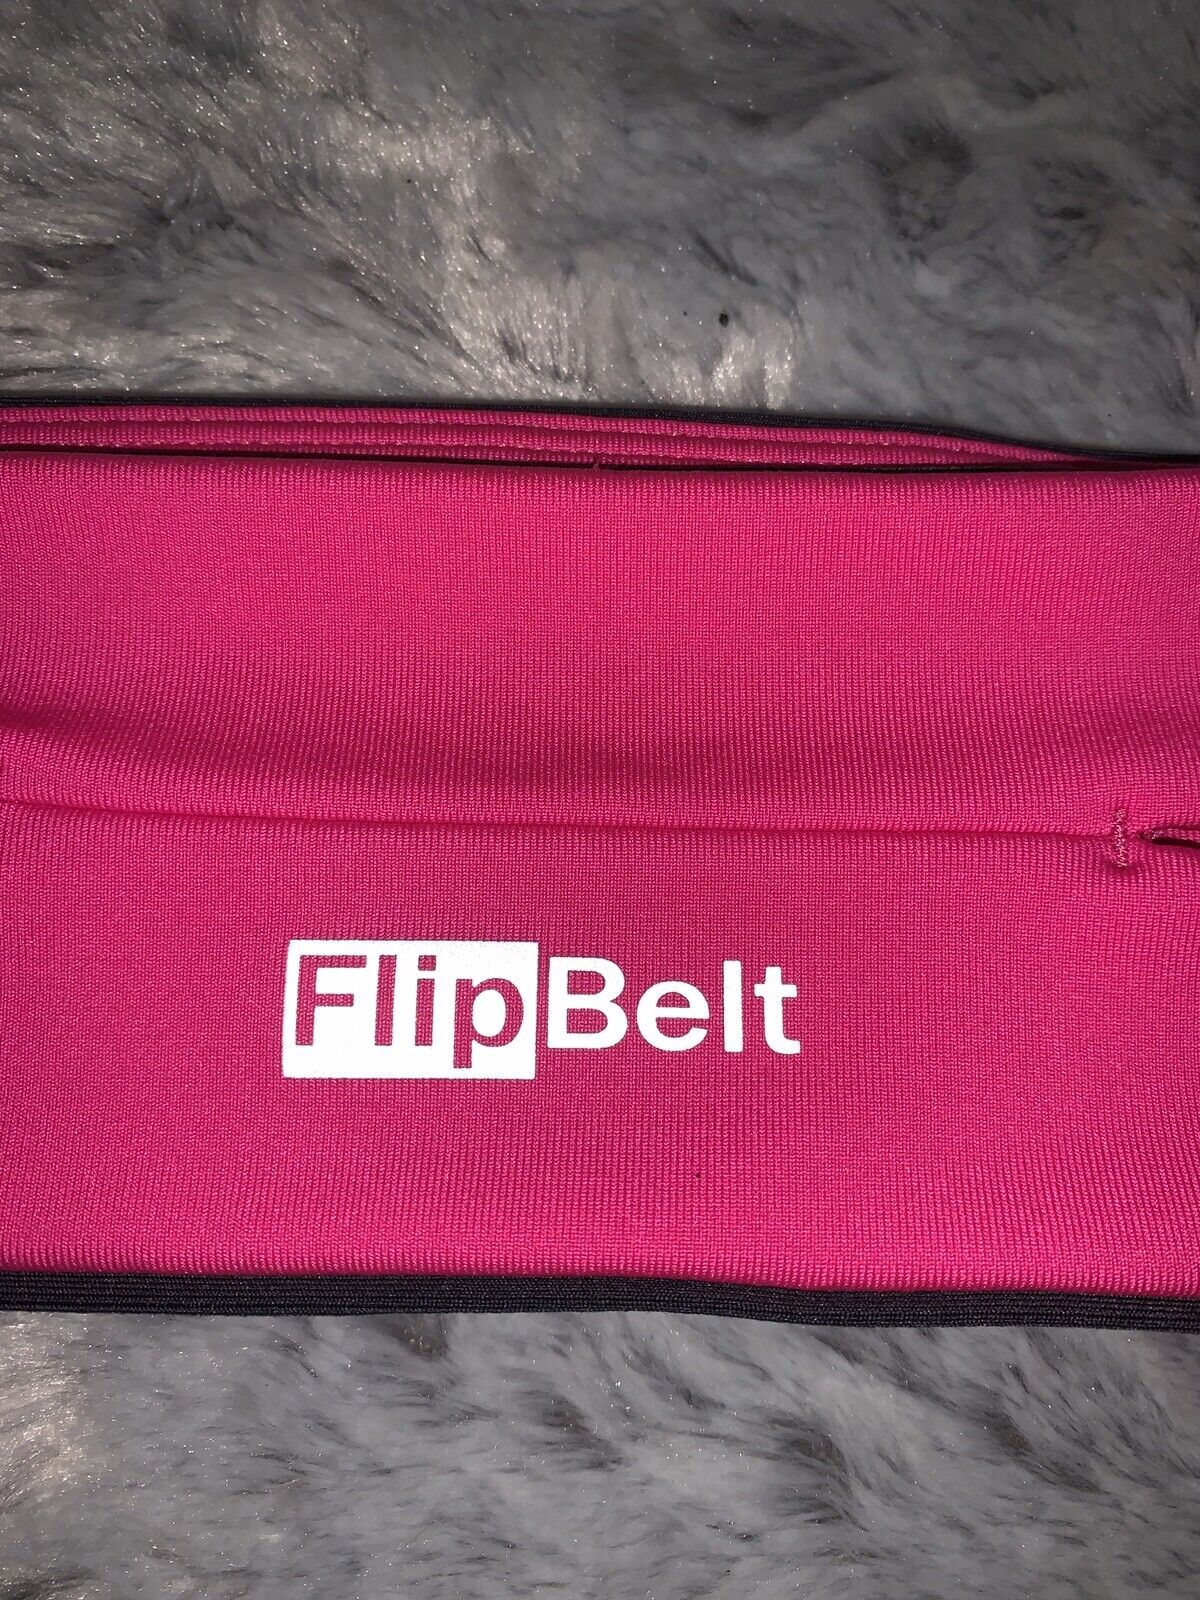 Flip Belt Carry Phone Keys Or $ Stylish Fitness Running Belt Hot Pink Size Large